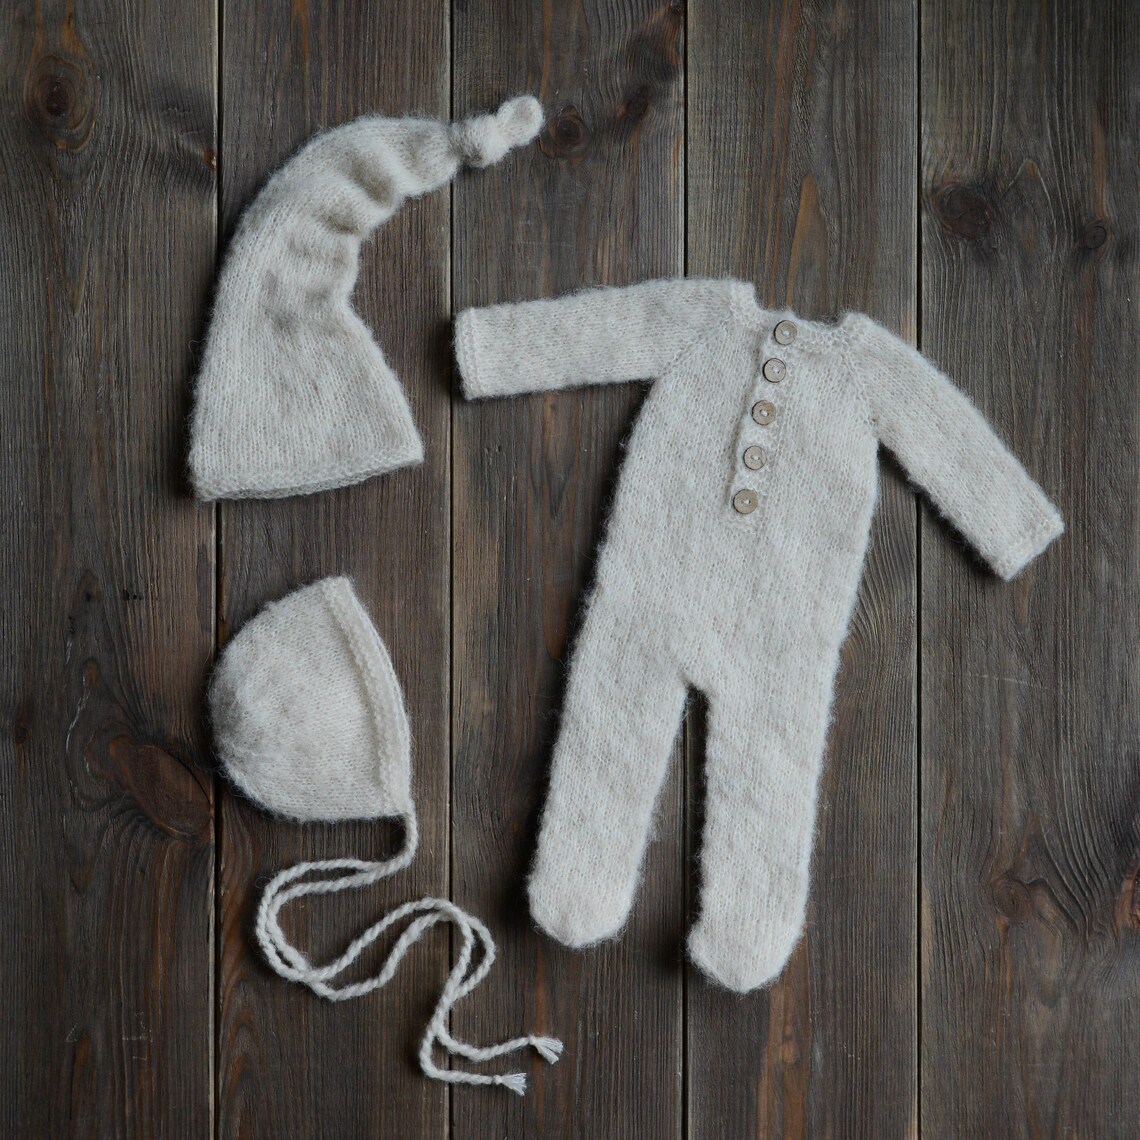 newborn footed romper knitted baby footie newborn sleeper romper + 2 hats